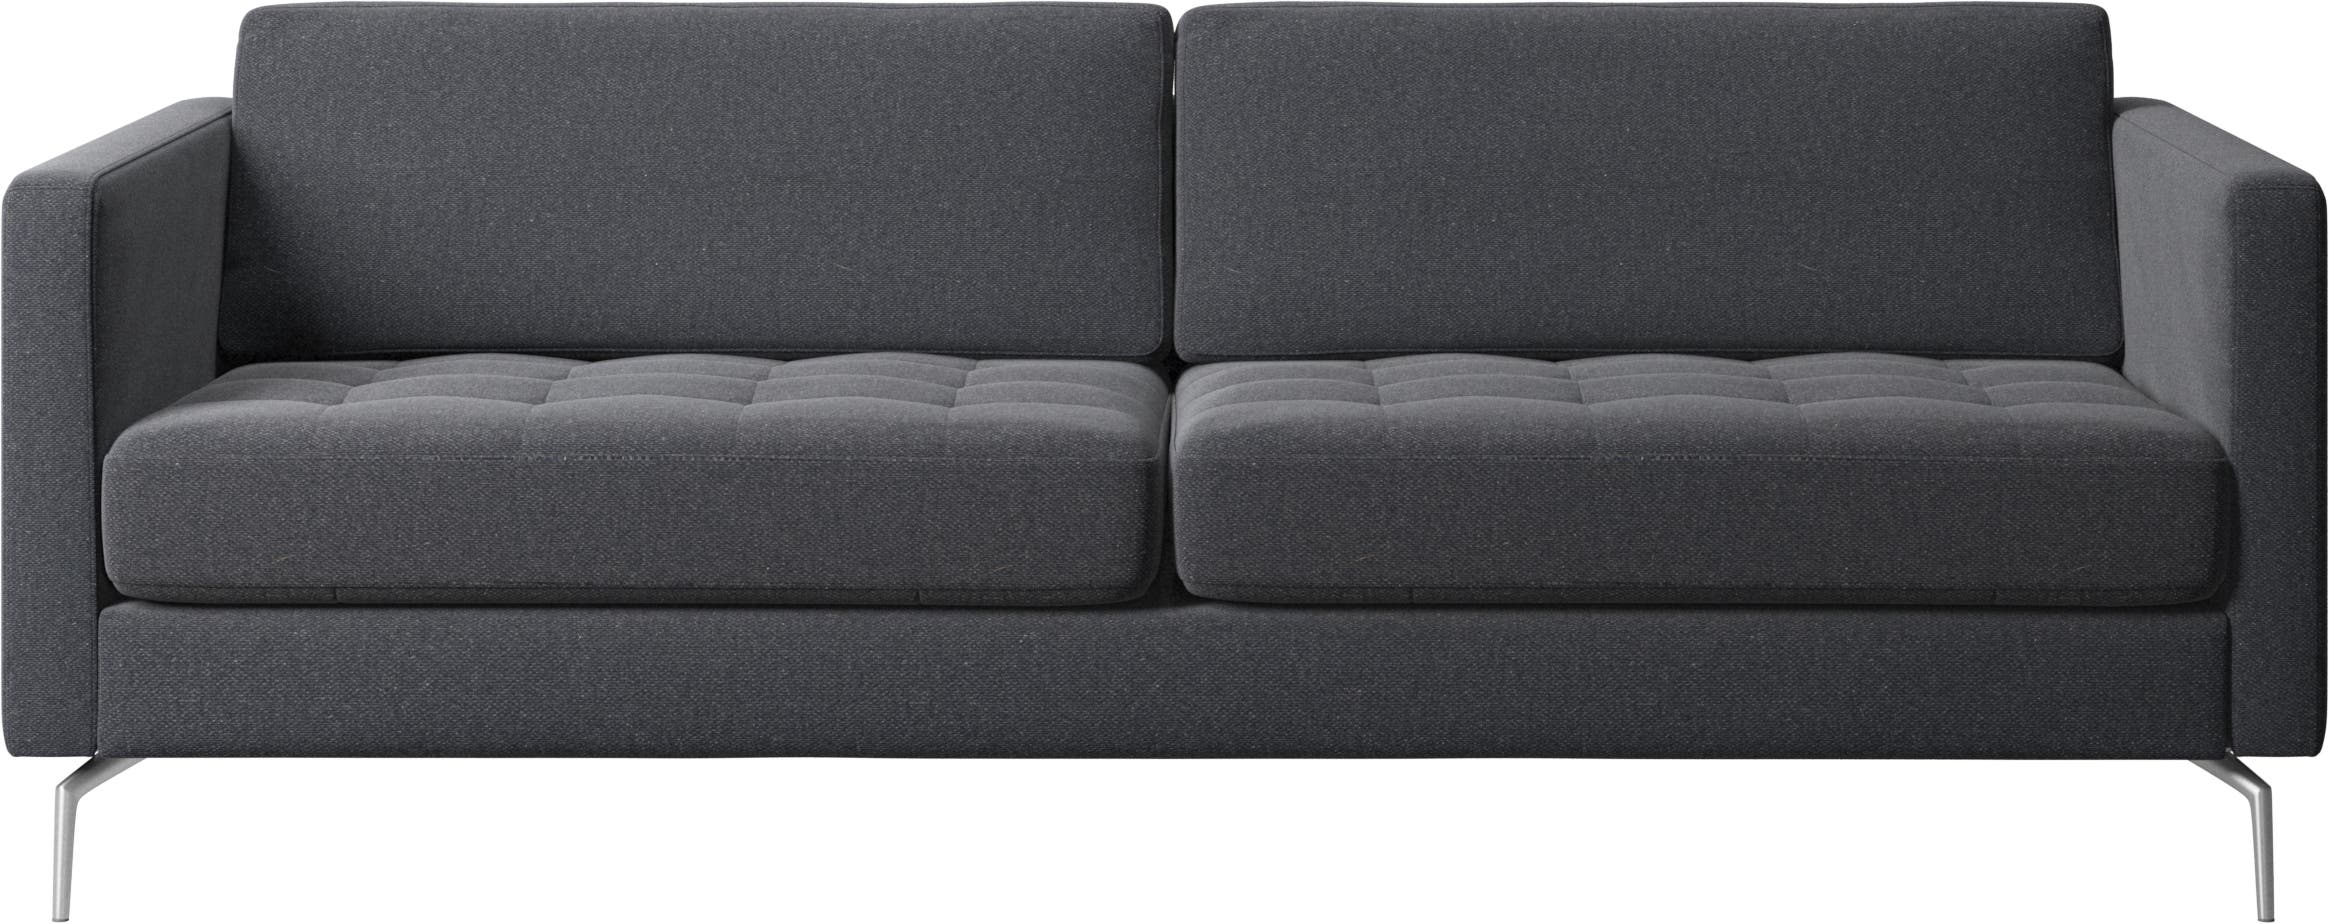 Osaka sofa, tufted seat